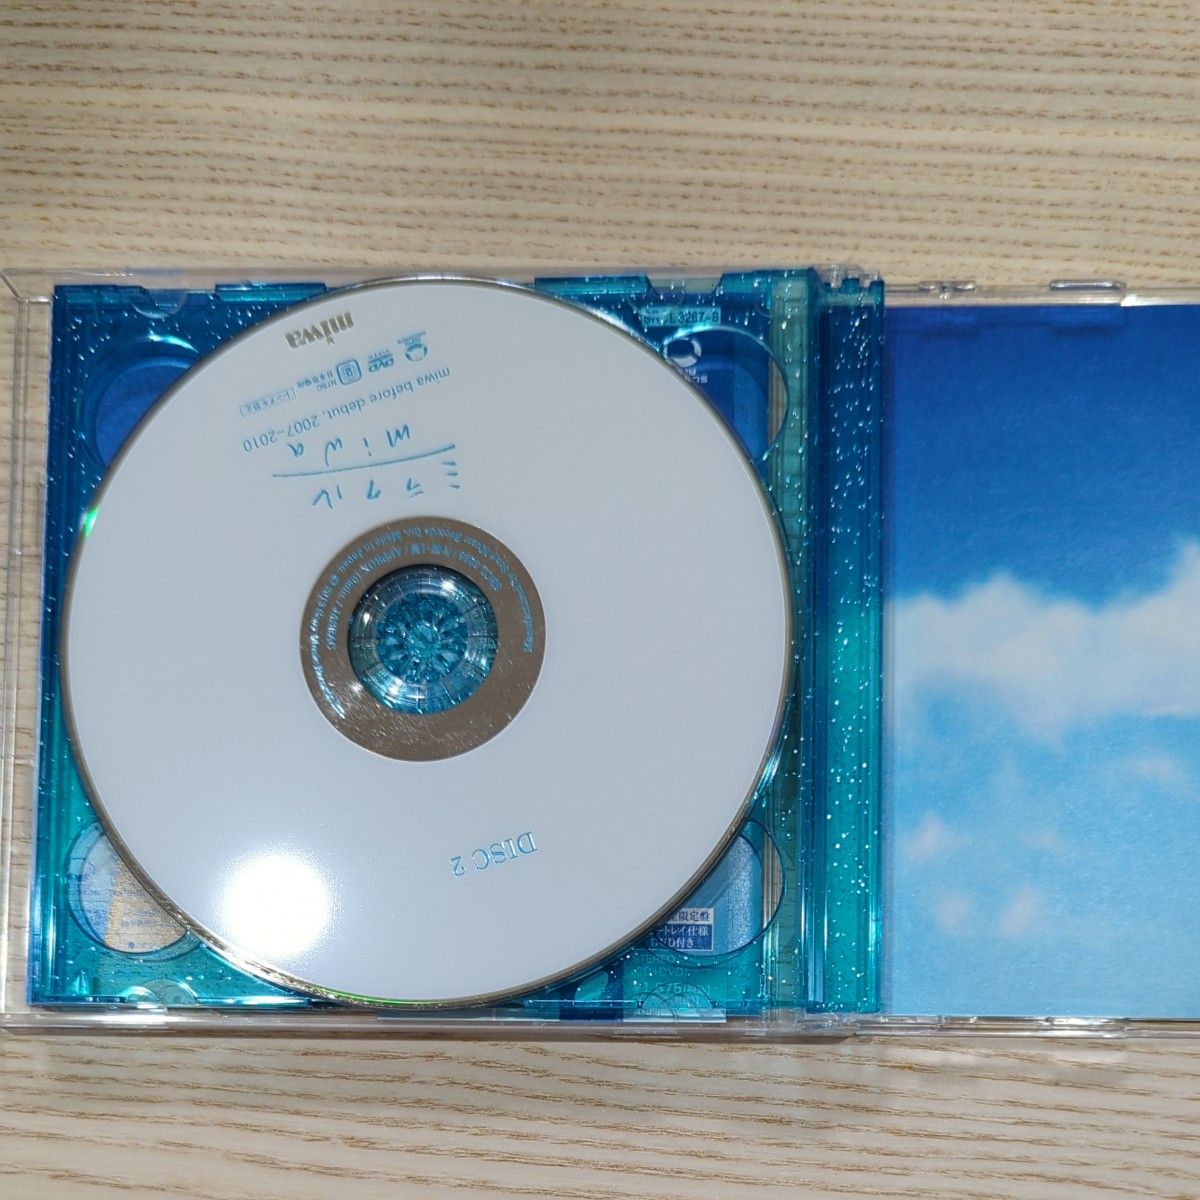 miwa ミラクル 中古CD